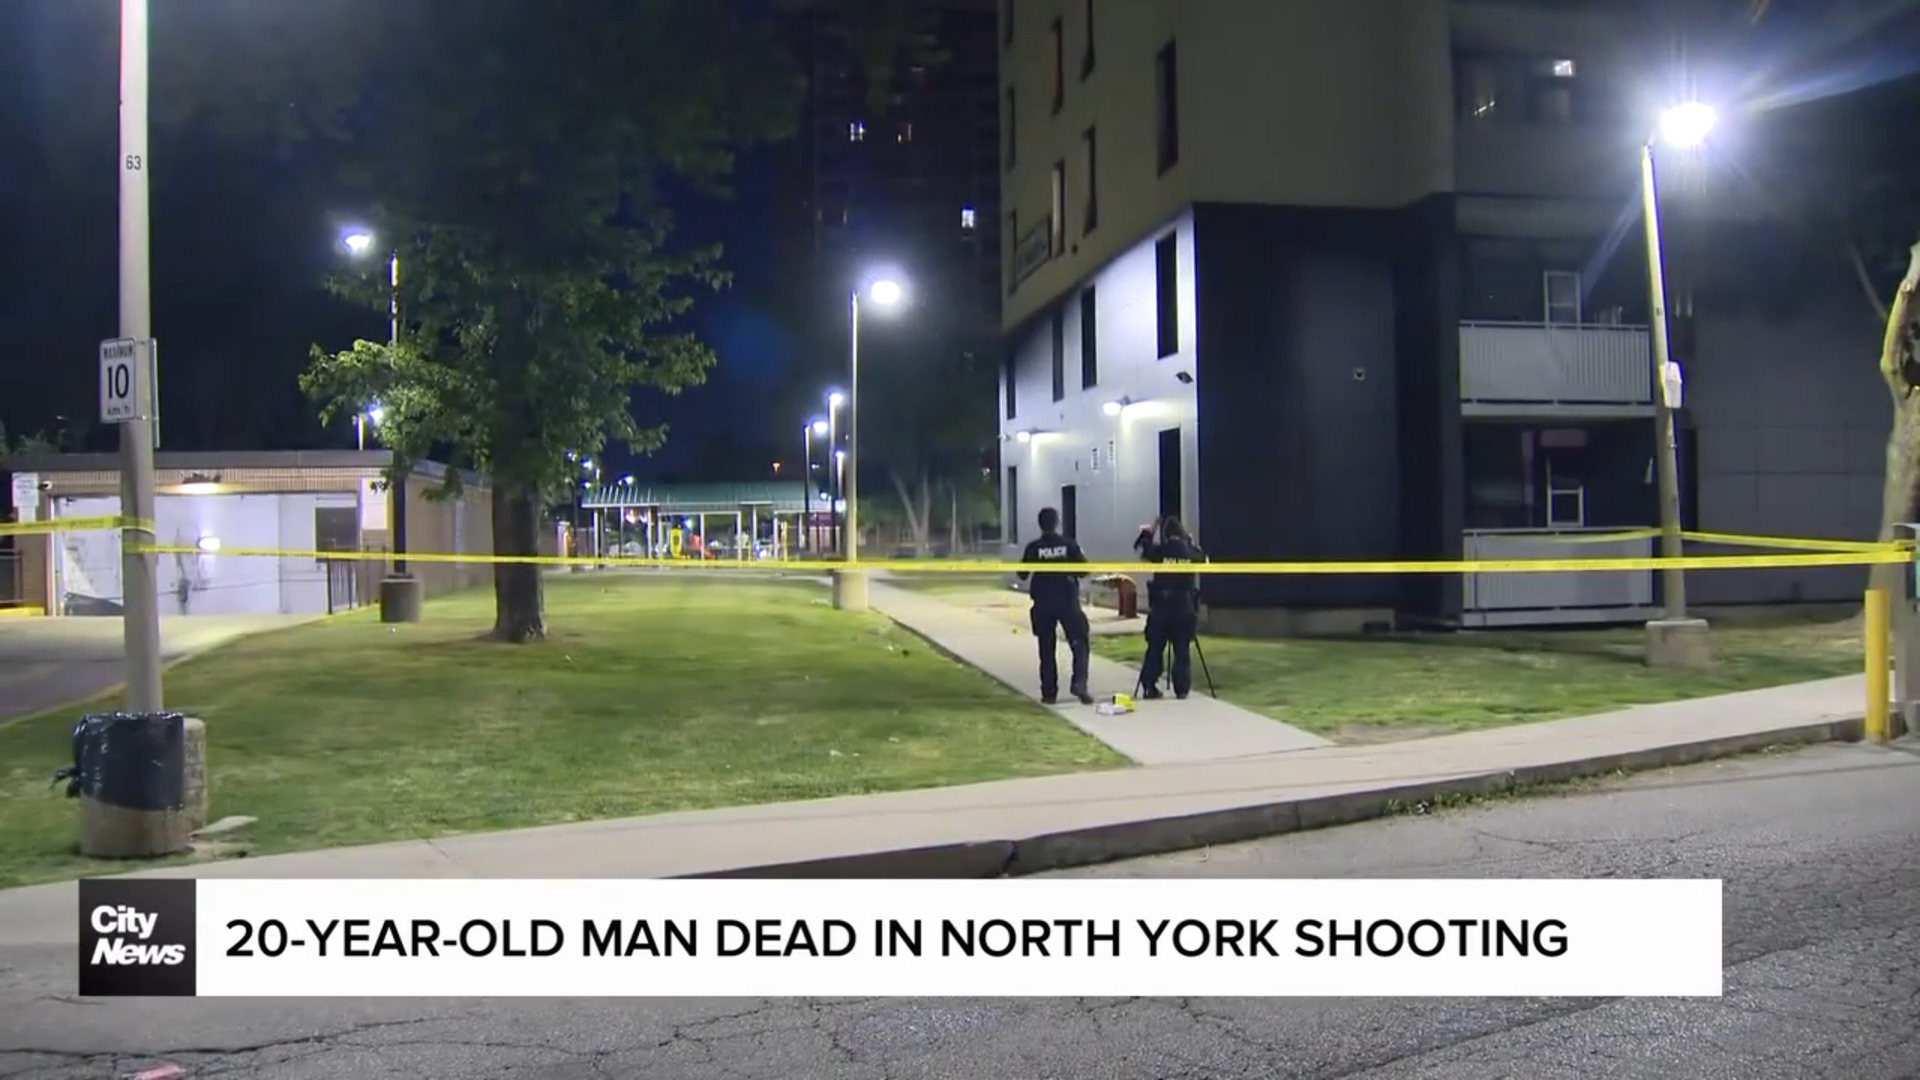 Police identify 20-year-old man shot dead in North York